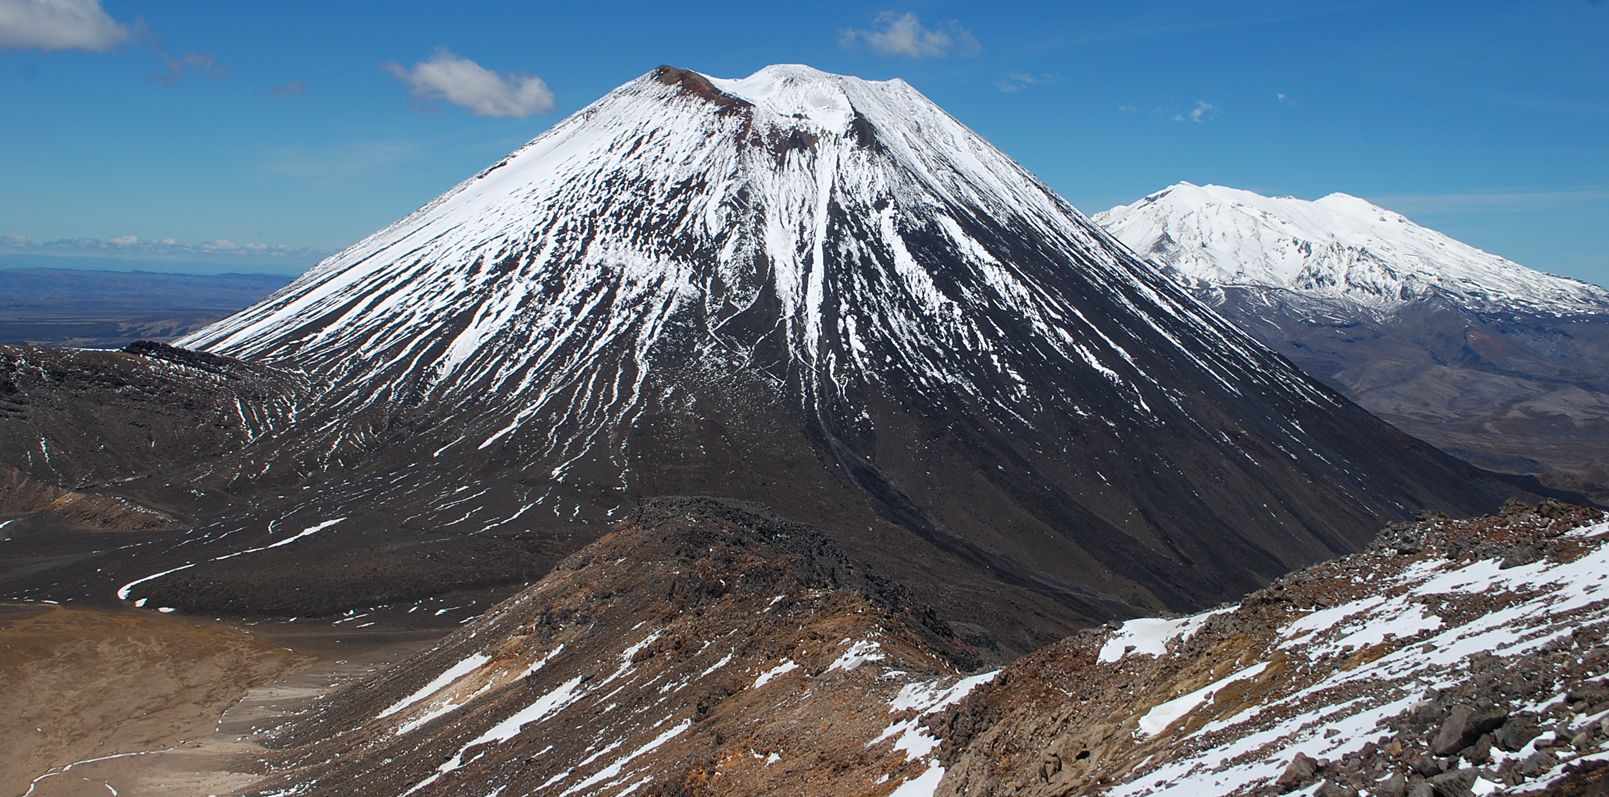 Mt. Ngauruhoe in winter